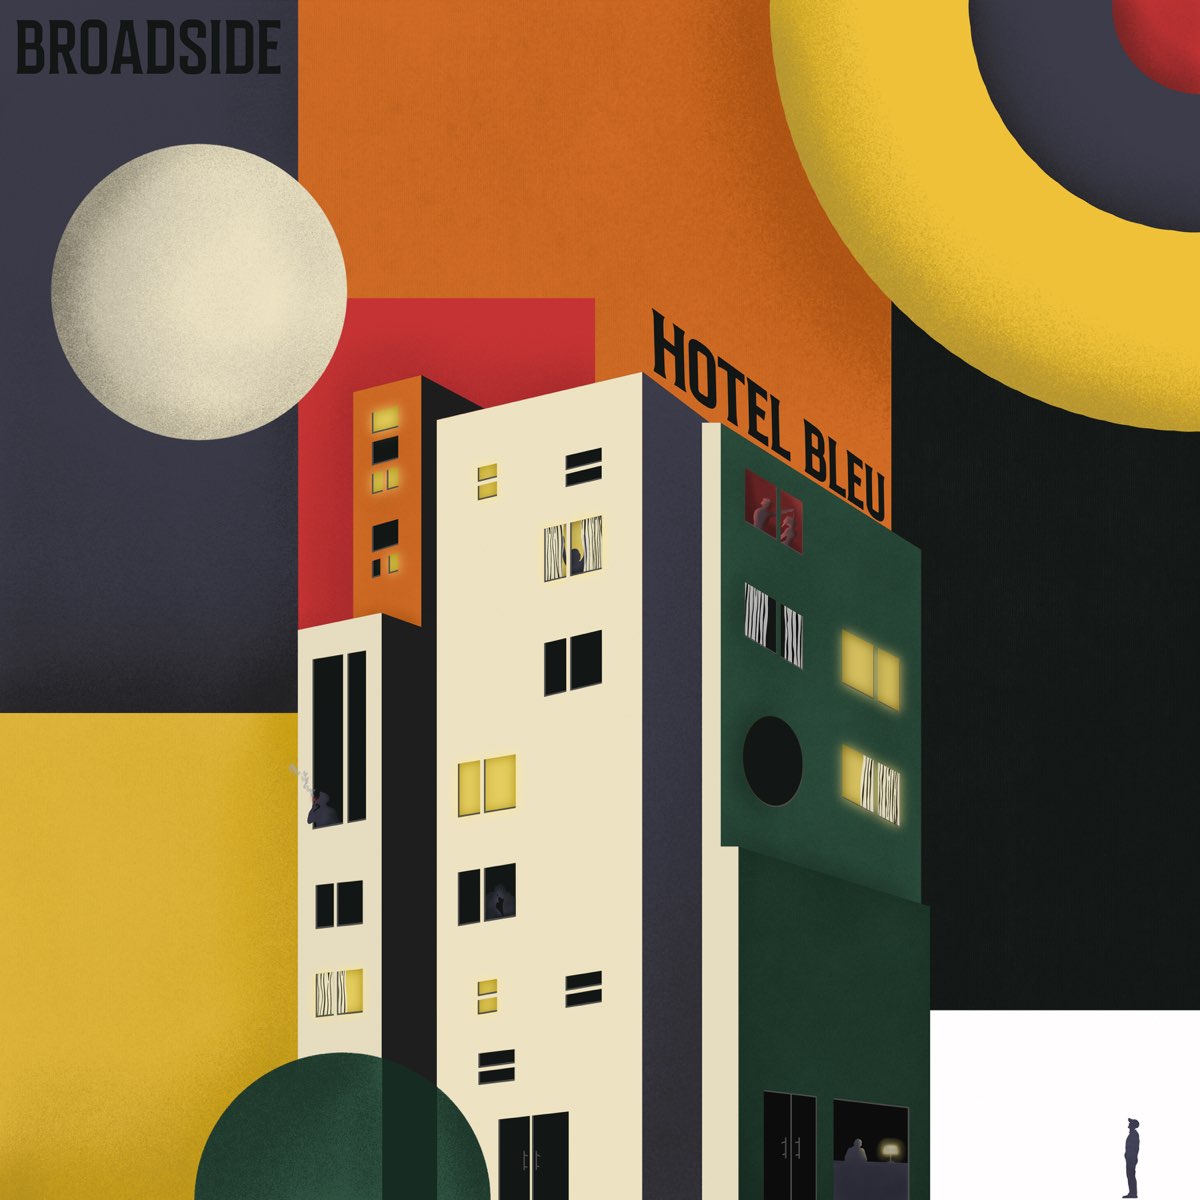 Broadside — Hotel Bleu cover artwork